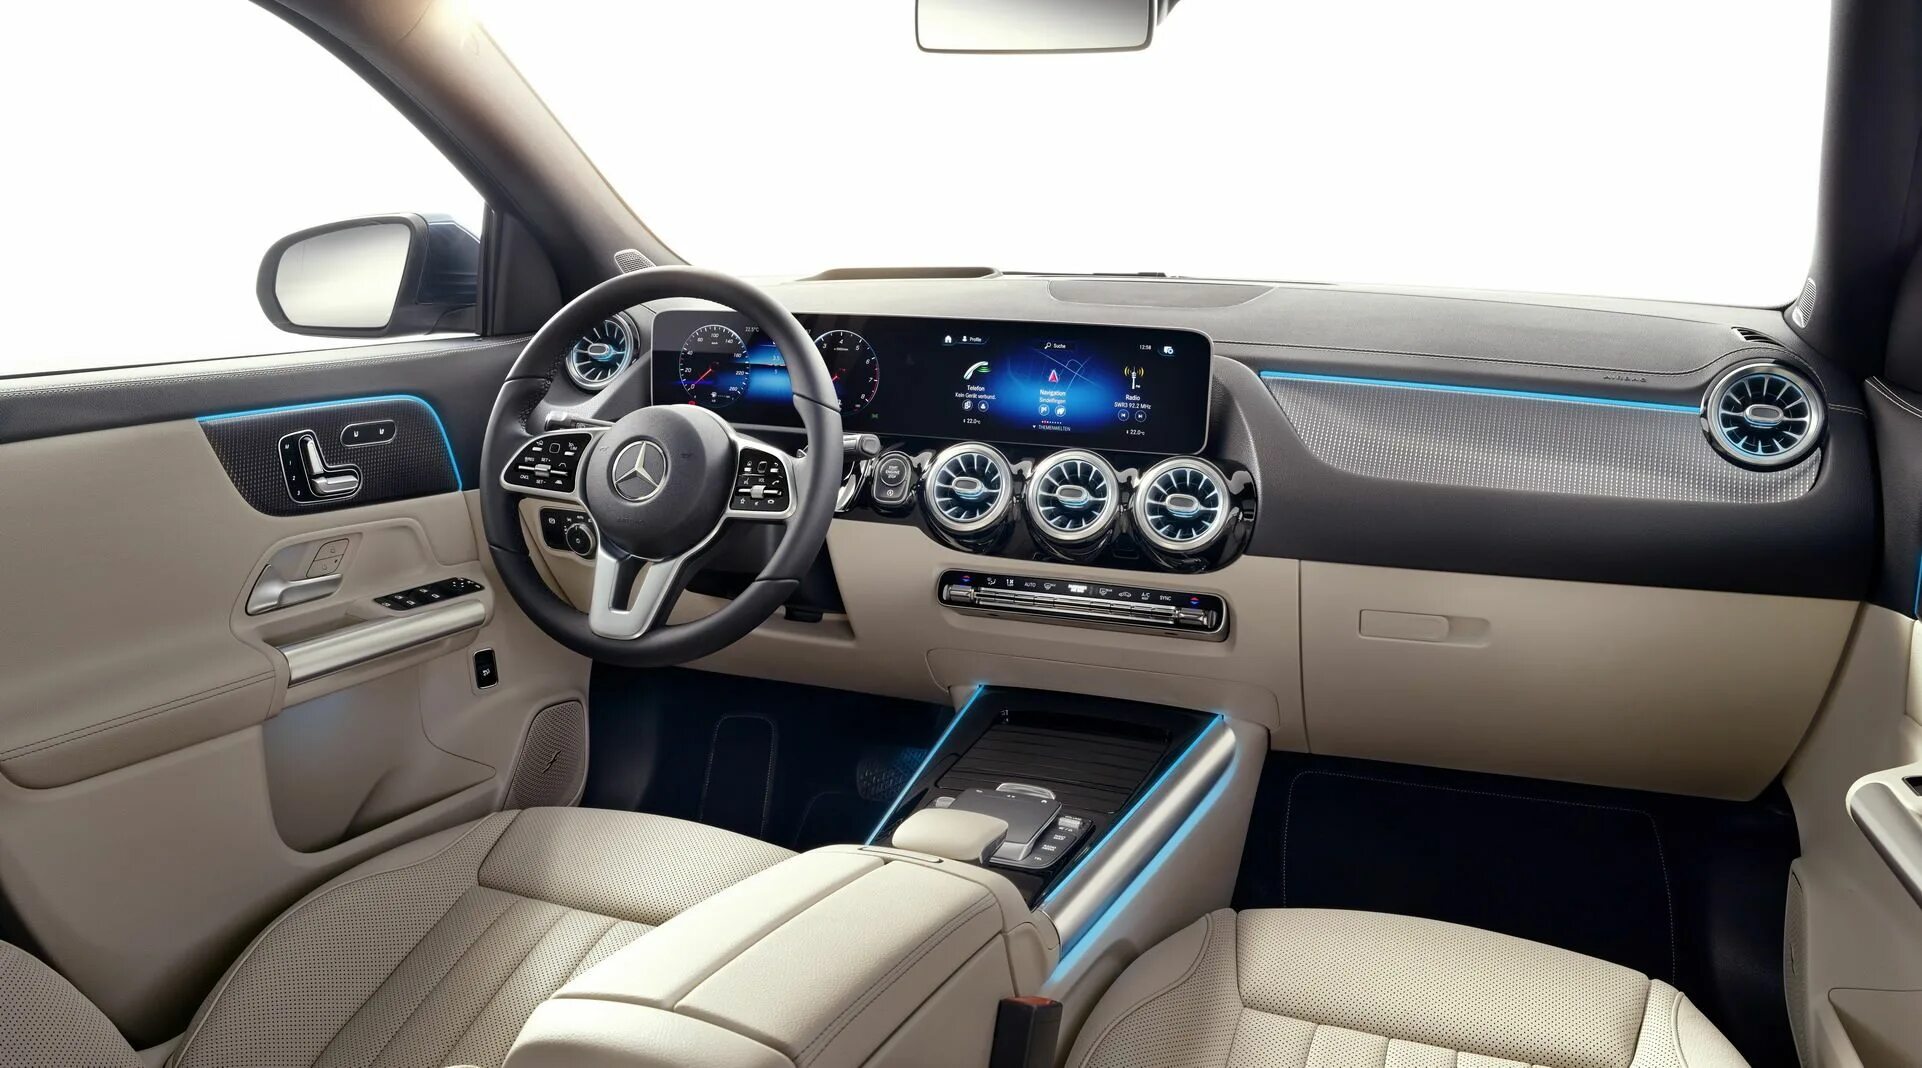 Mercedes Benz GLA 2020 салон. Mercedes Benz GLA 2021 салон. Mercedes Benz GLS 2020 салон. Mercedes Benz GLA Coupe 2021 салон.